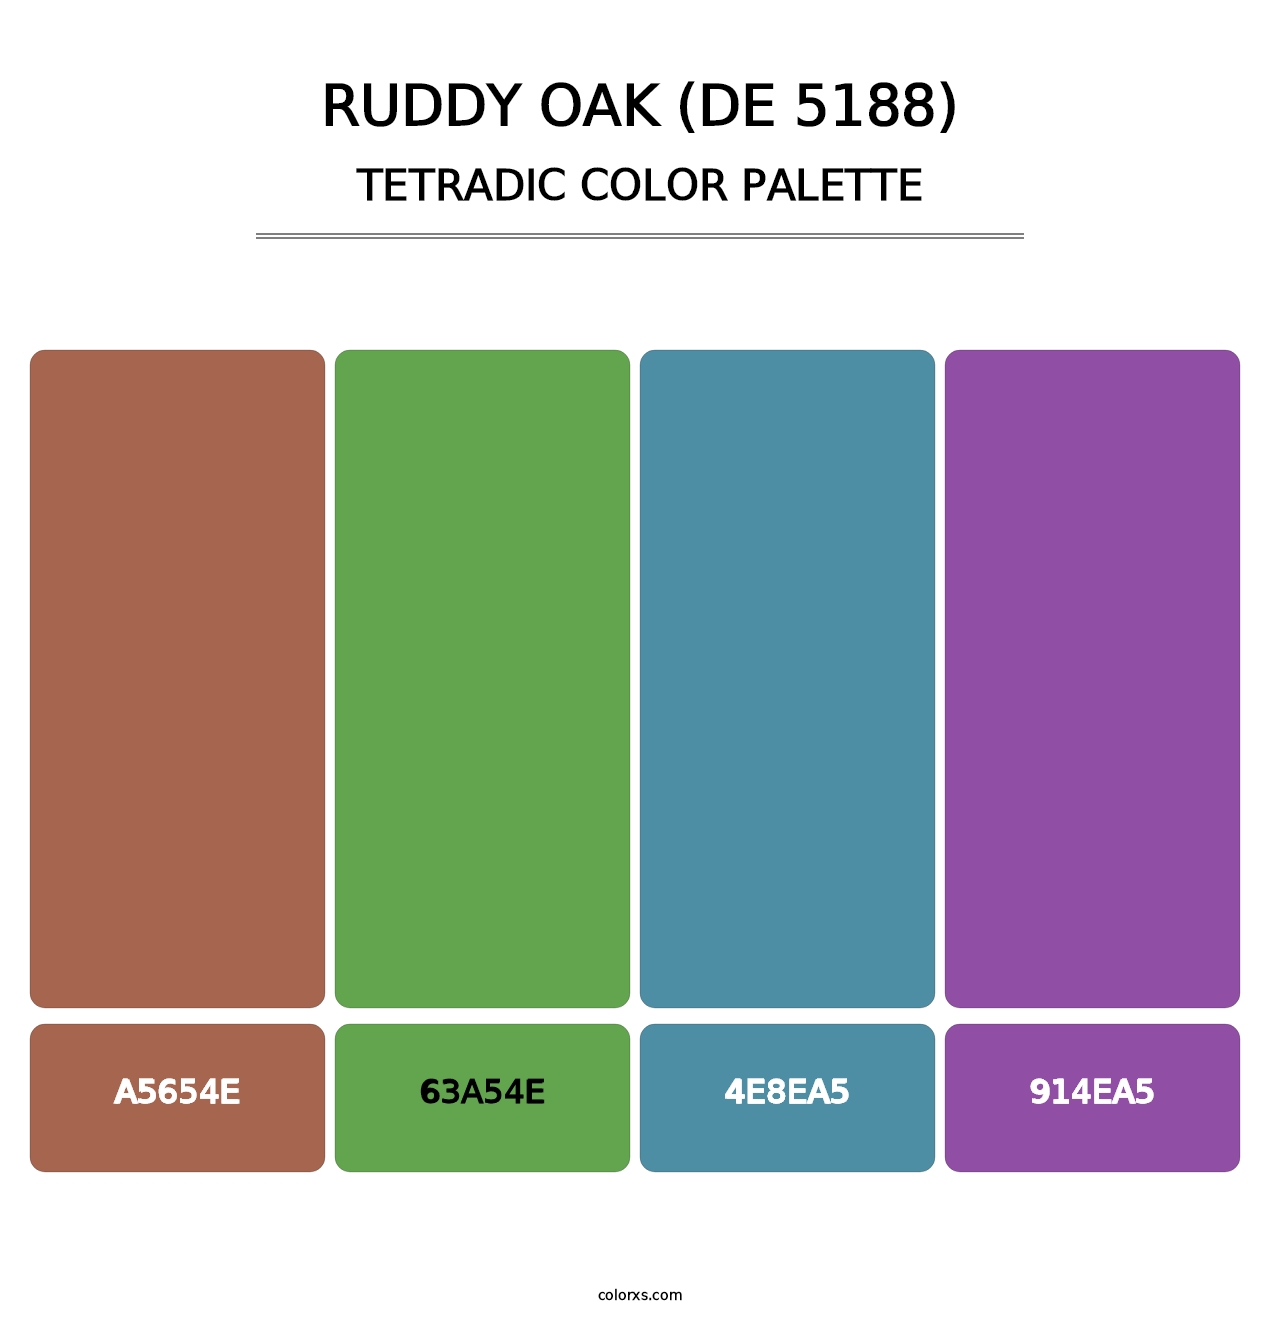 Ruddy Oak (DE 5188) - Tetradic Color Palette